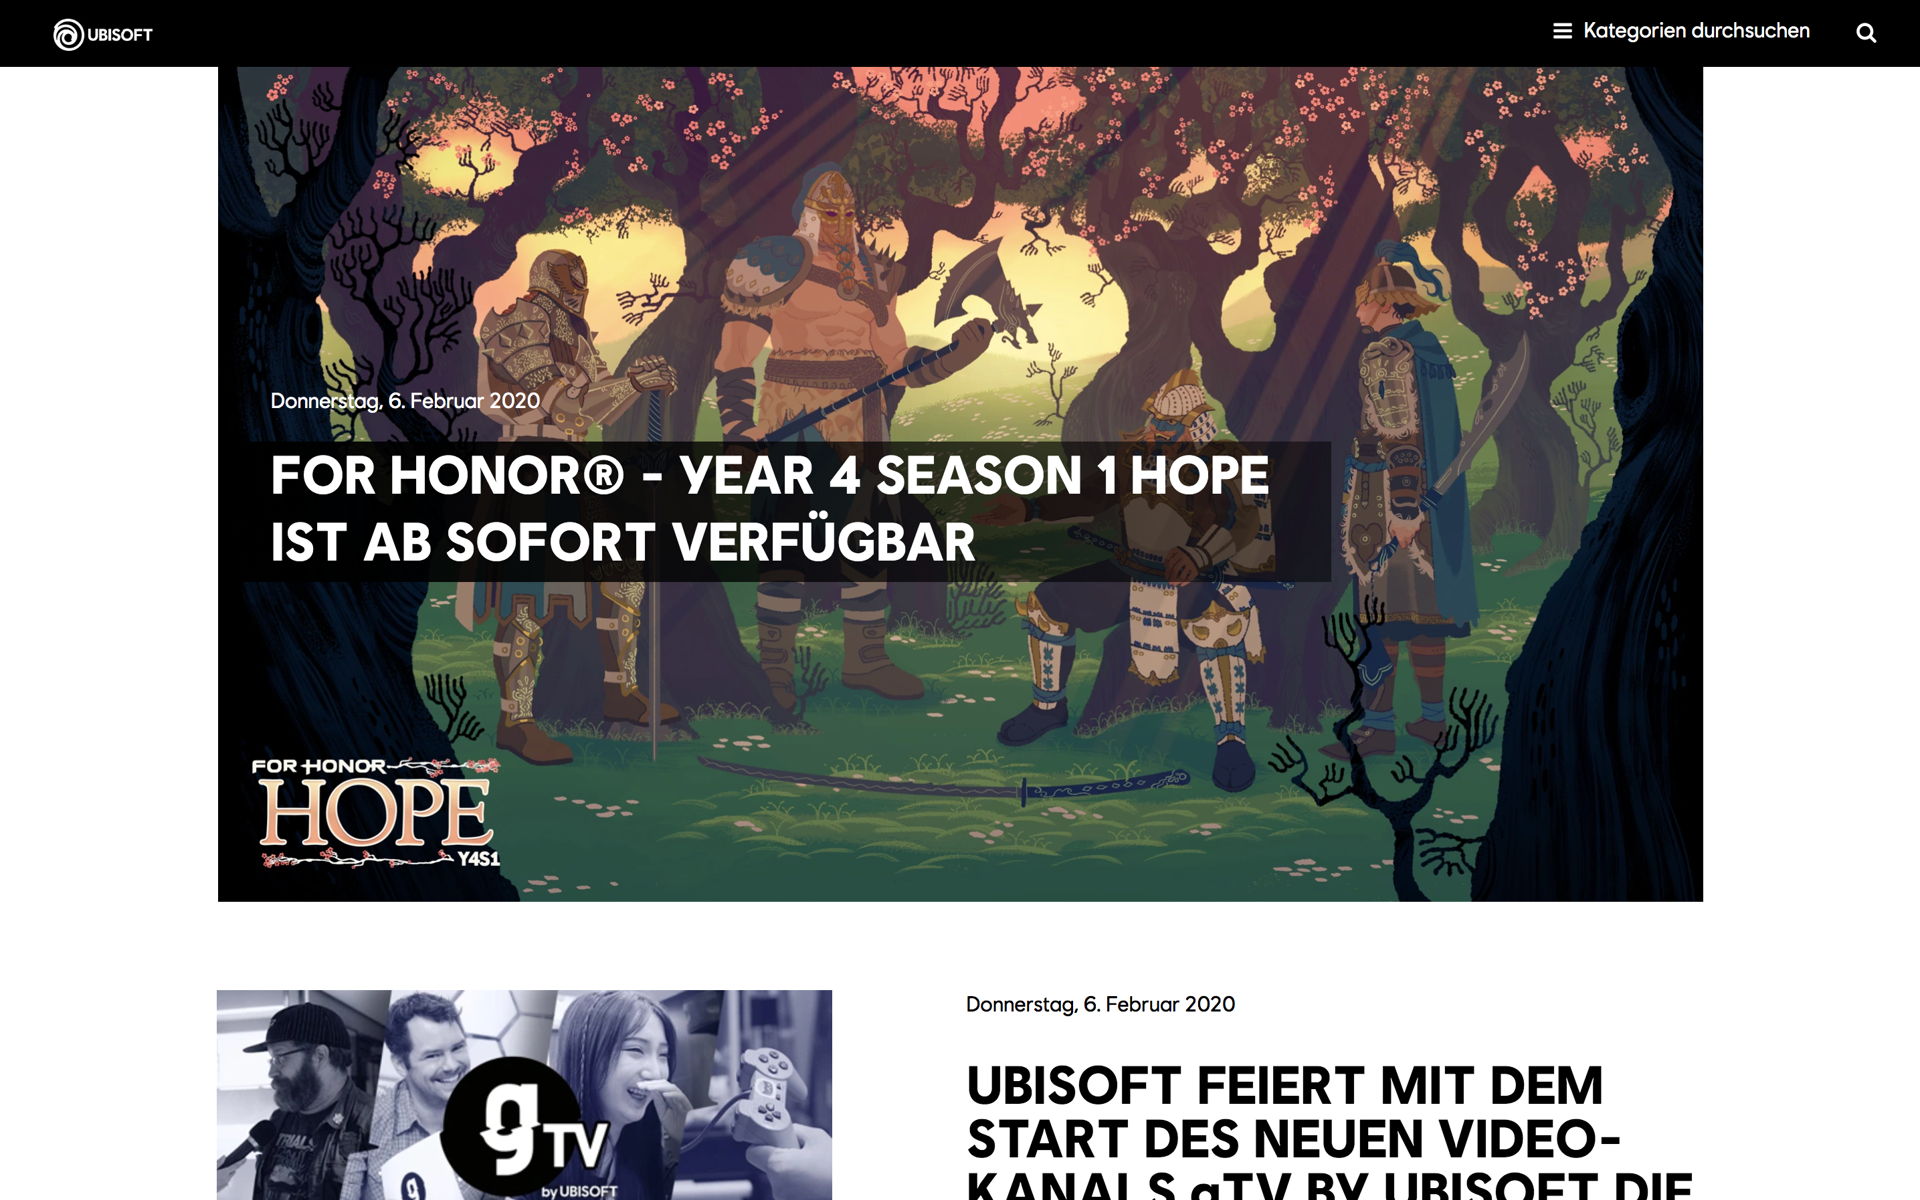 Ubisoft has built a brand legacy through storytelling